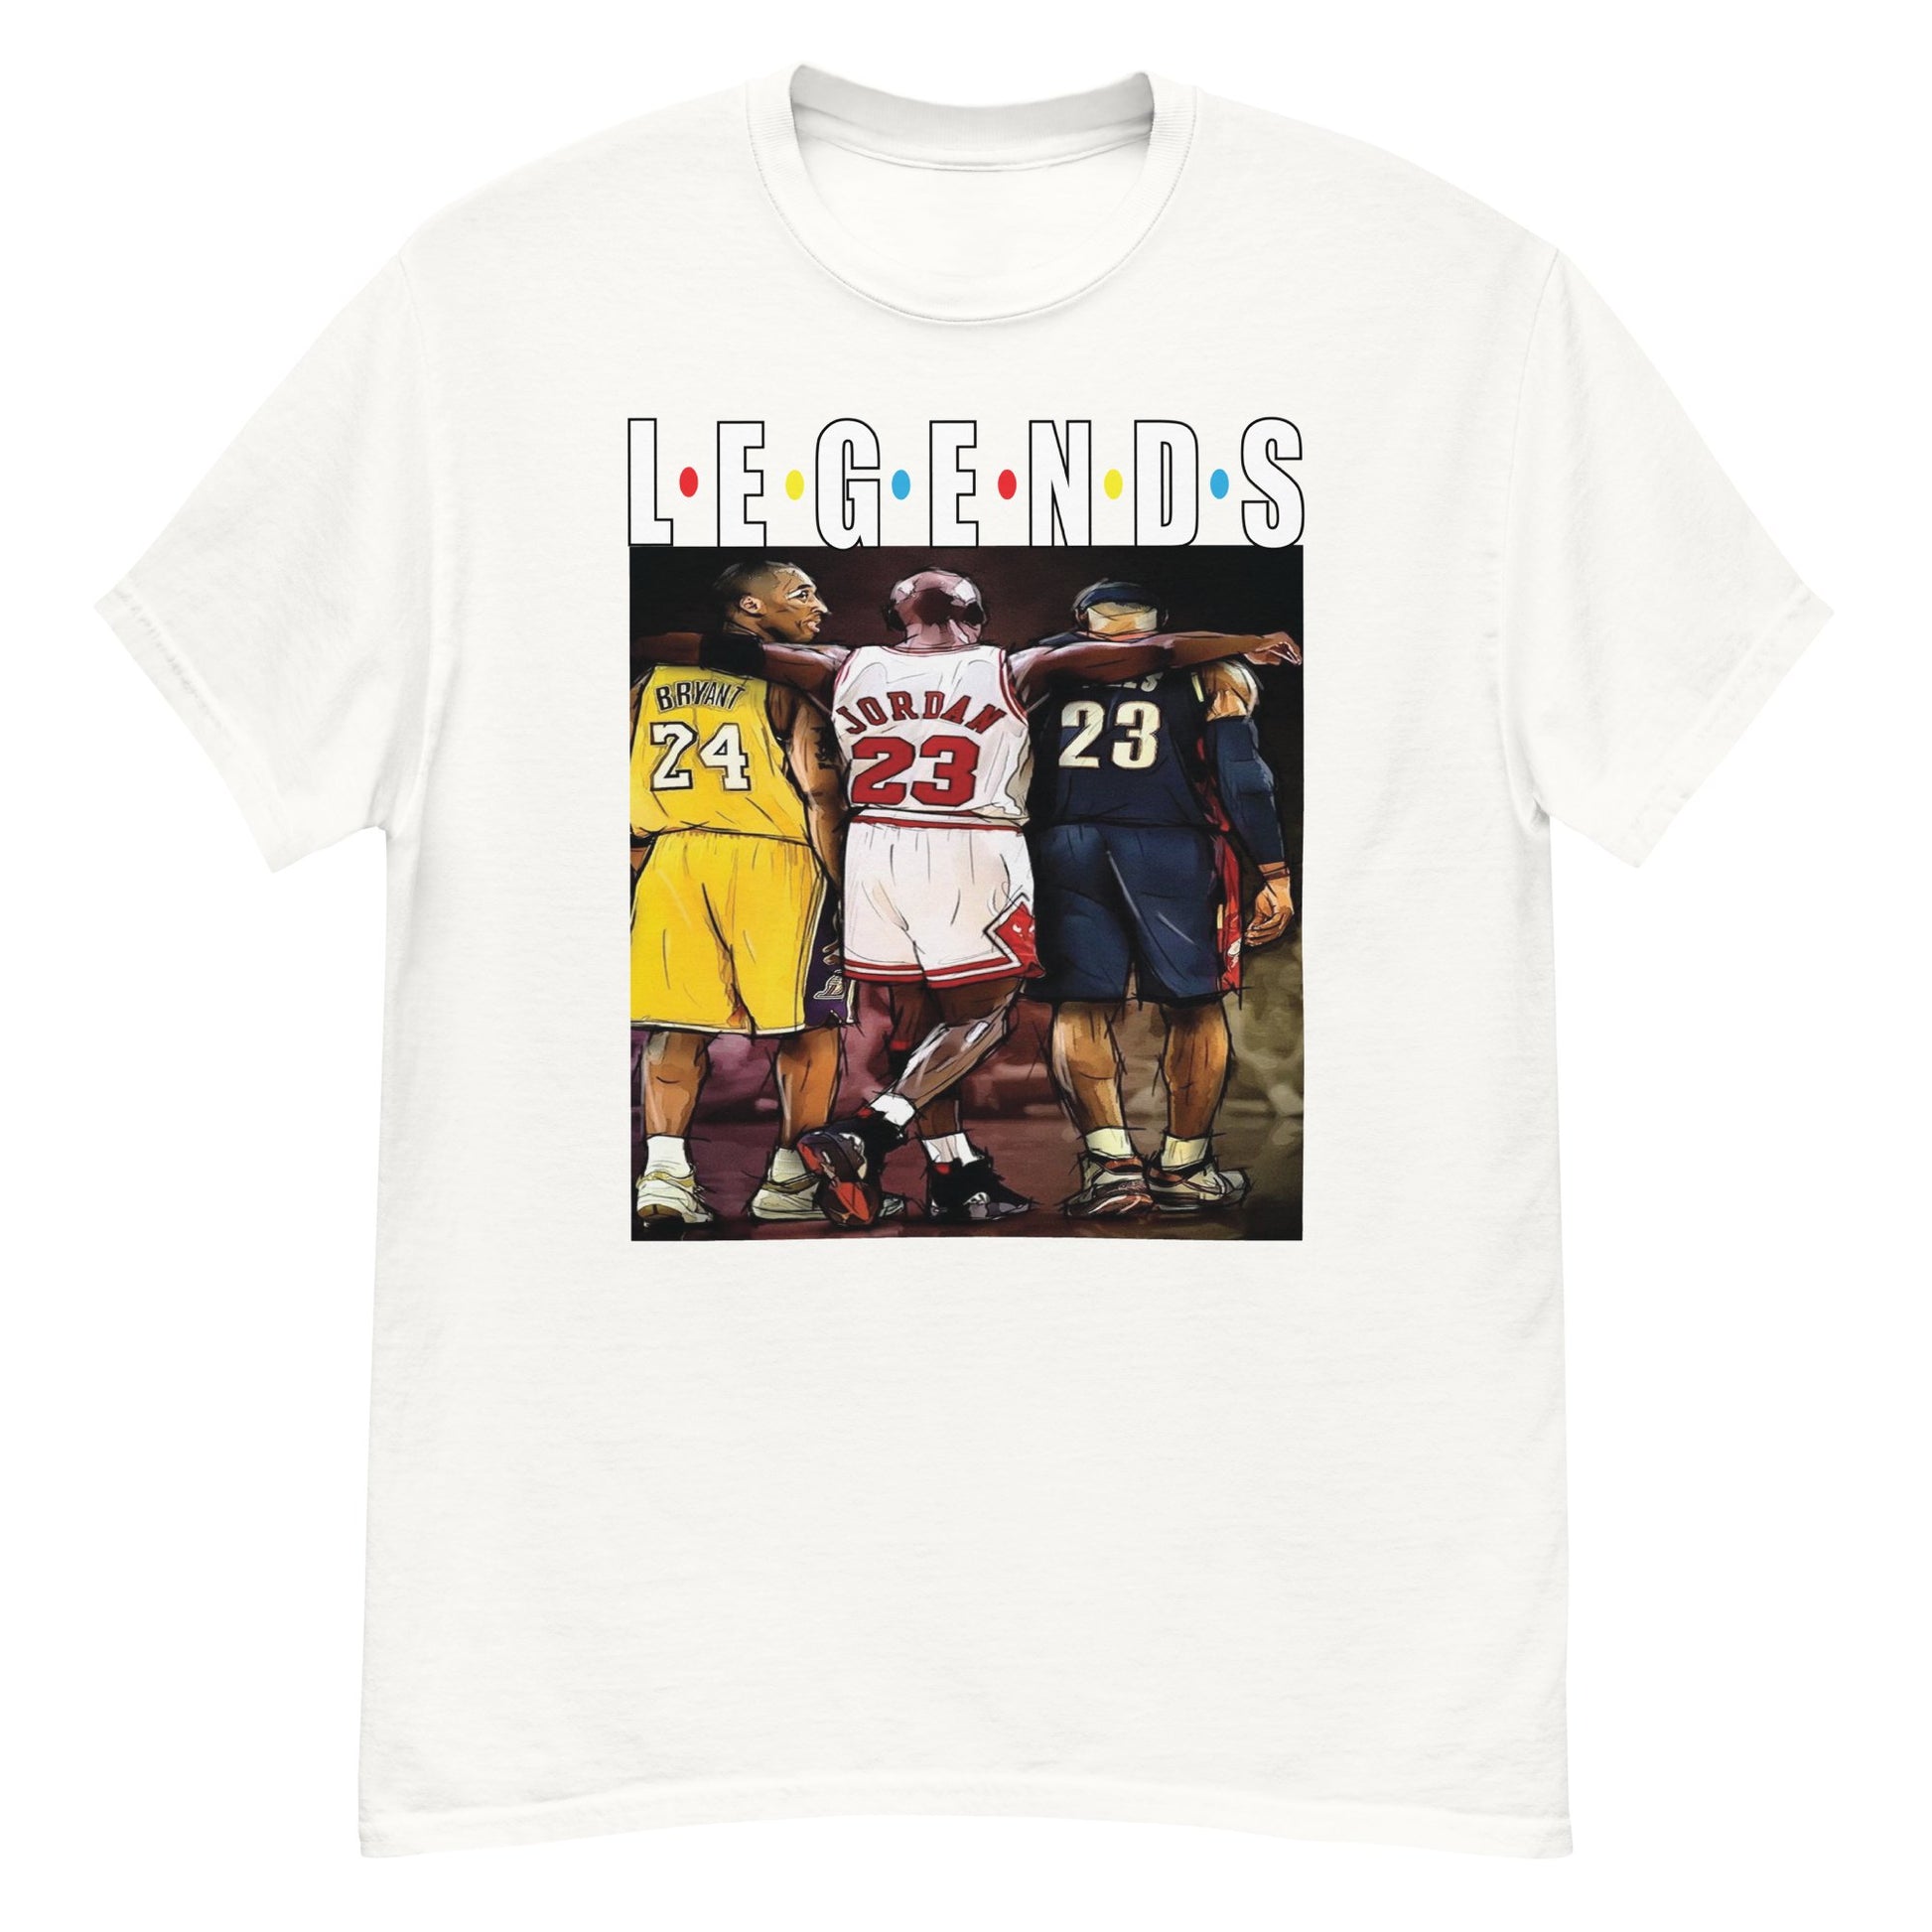 Legends T-shirt : Michael Jordan , kobe Bryant , and LeBron James Trio - The Truth Graphics